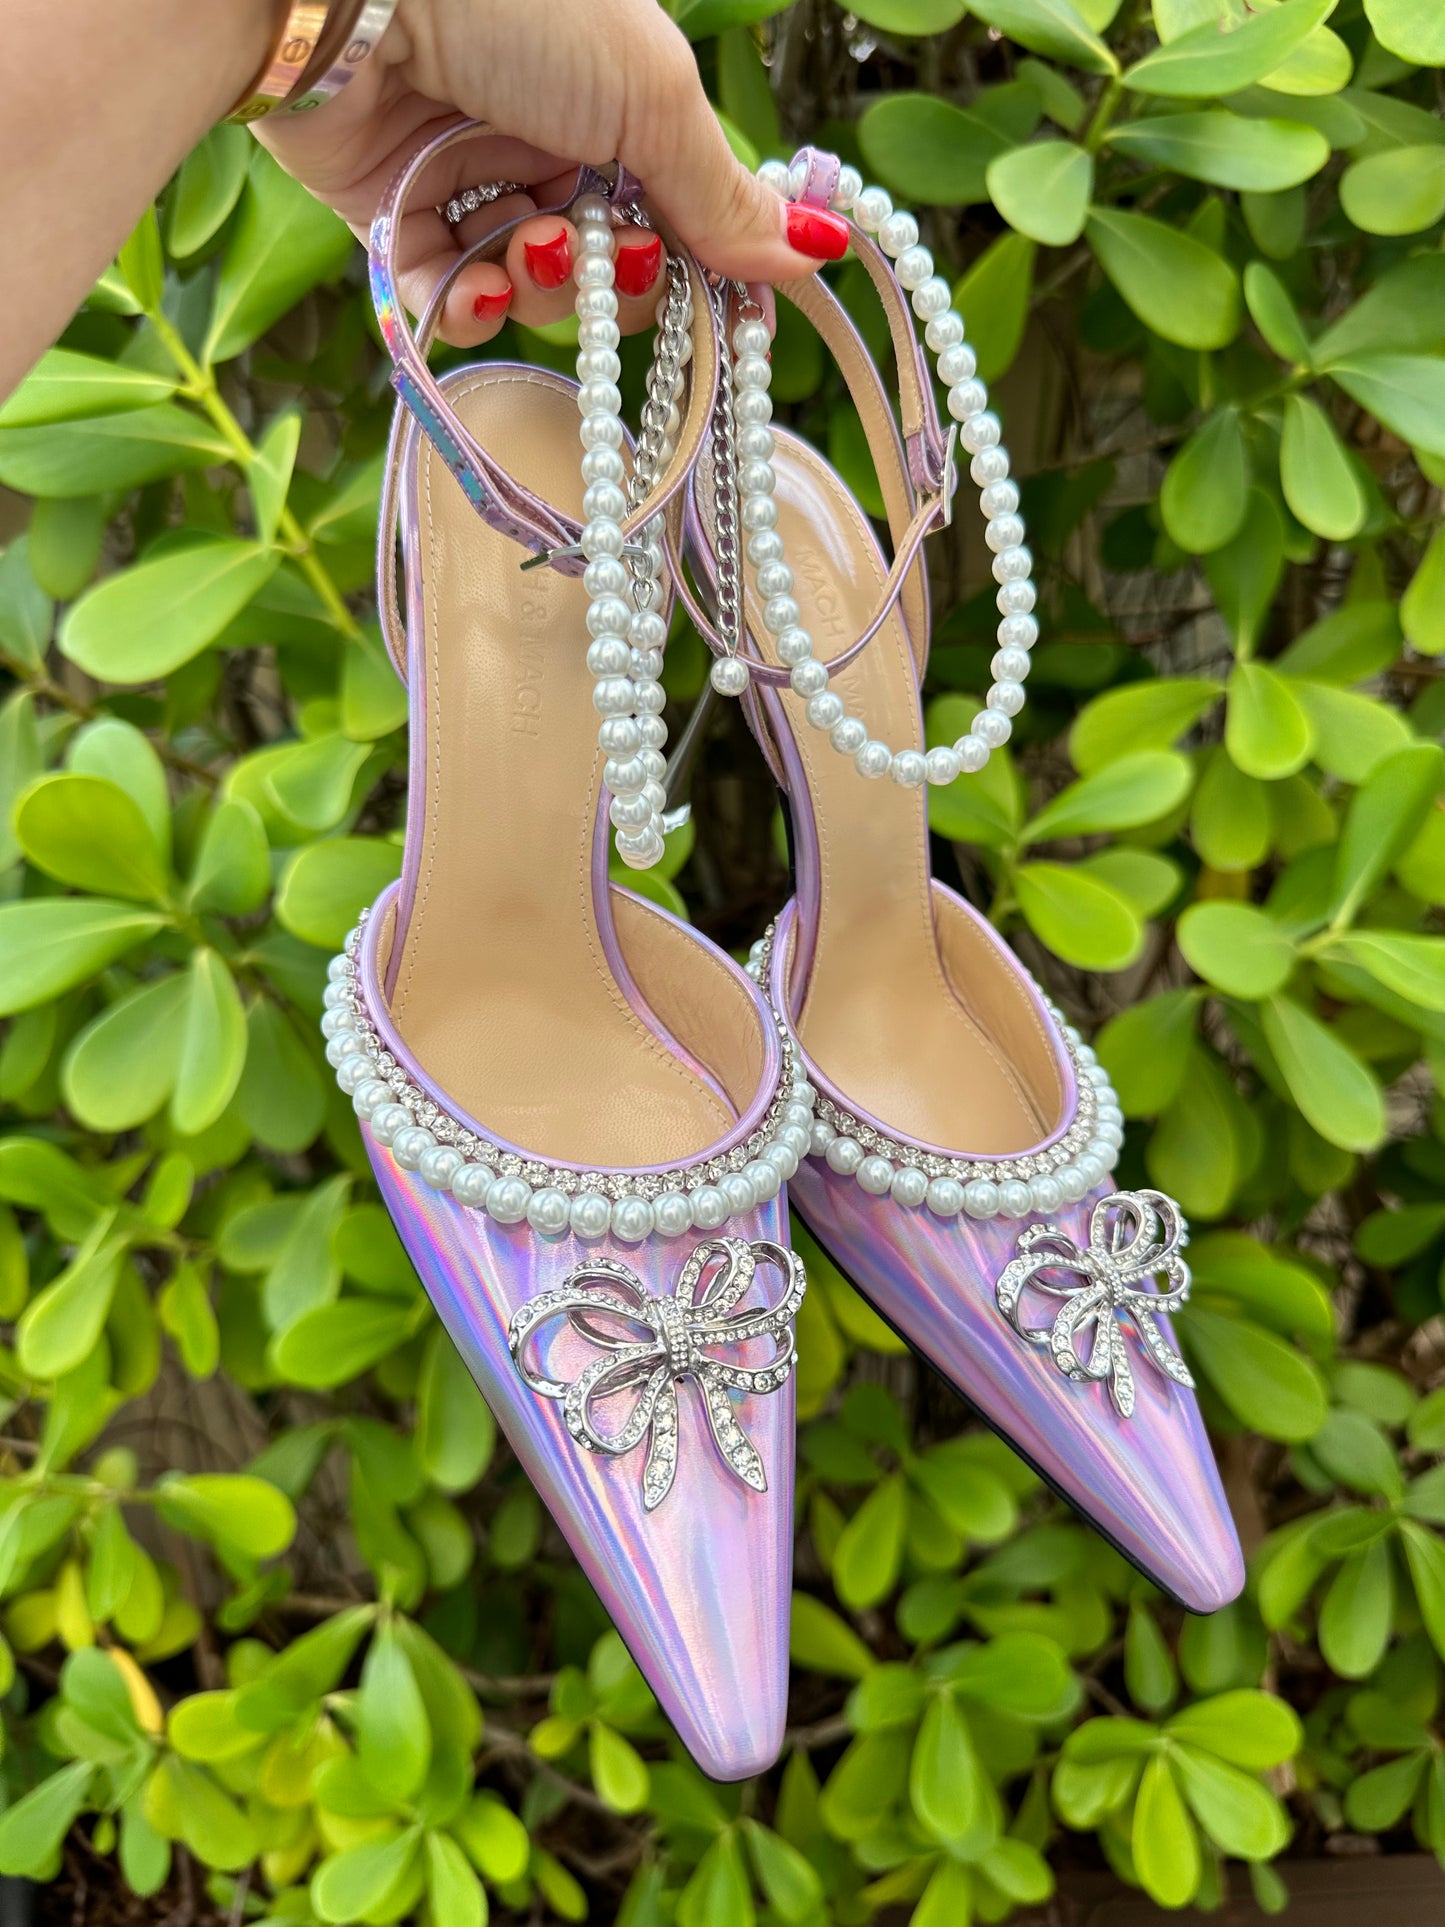 Mach & Mach Sophie Pointed Toe Crystal Embellished Pearl Bow Heel